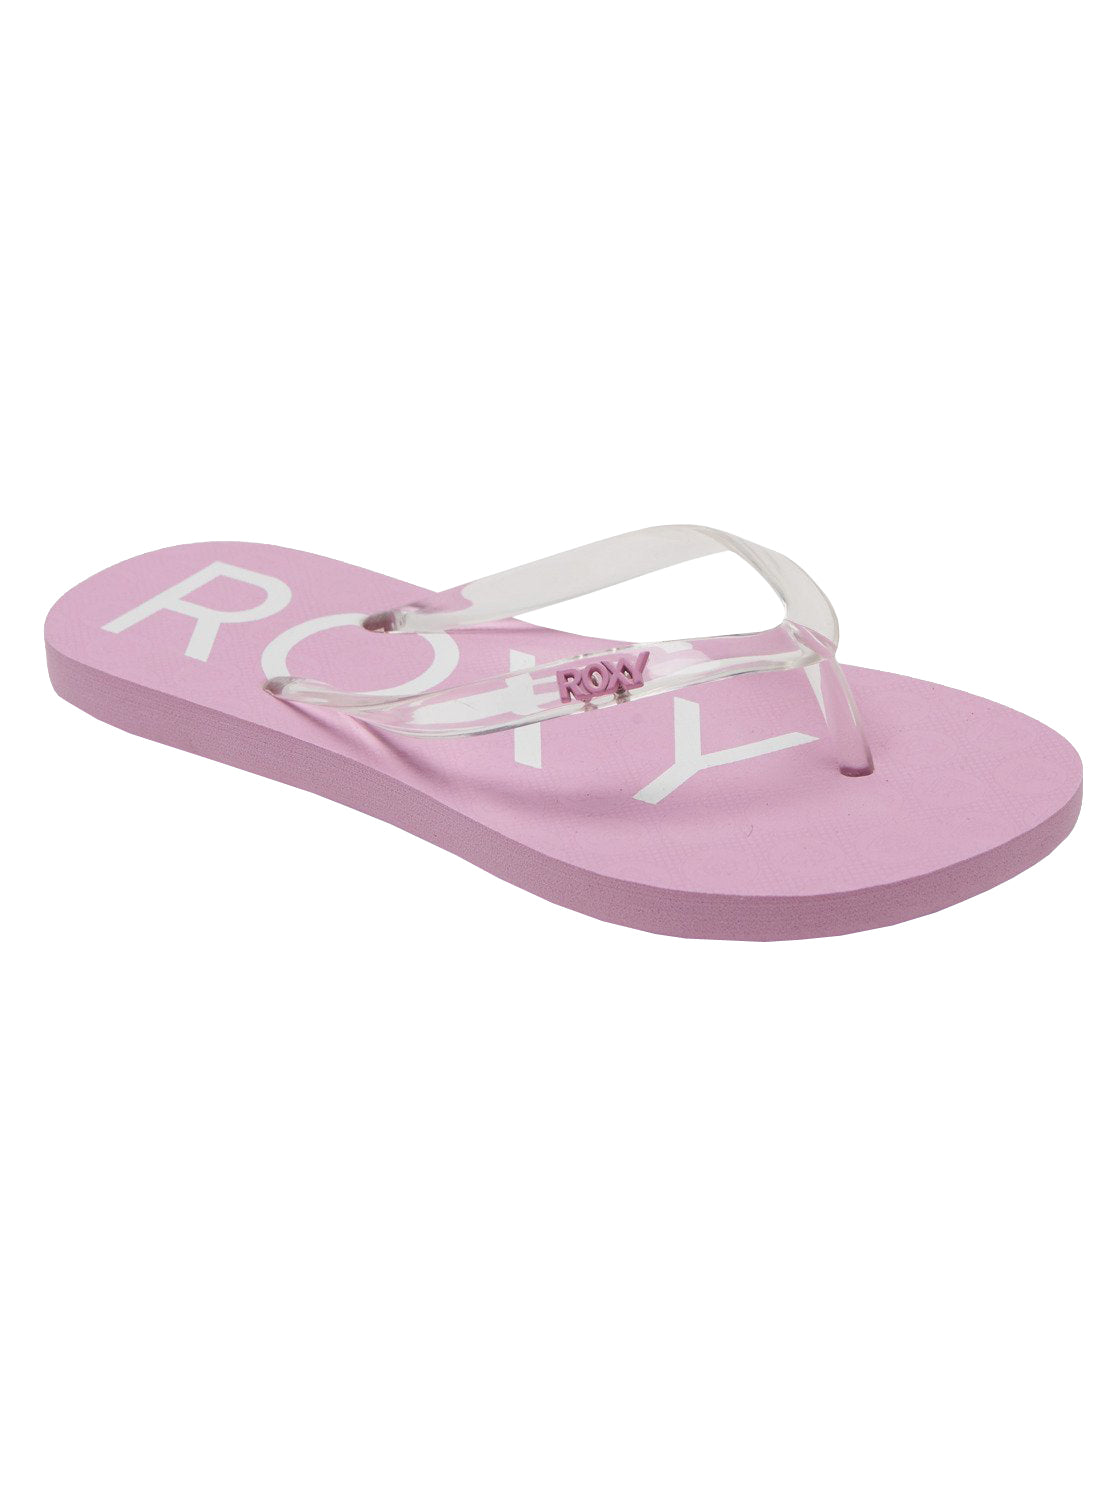 Roxy Viva Jelly Girls Sandal LRS-Lilac Rose 2 Y